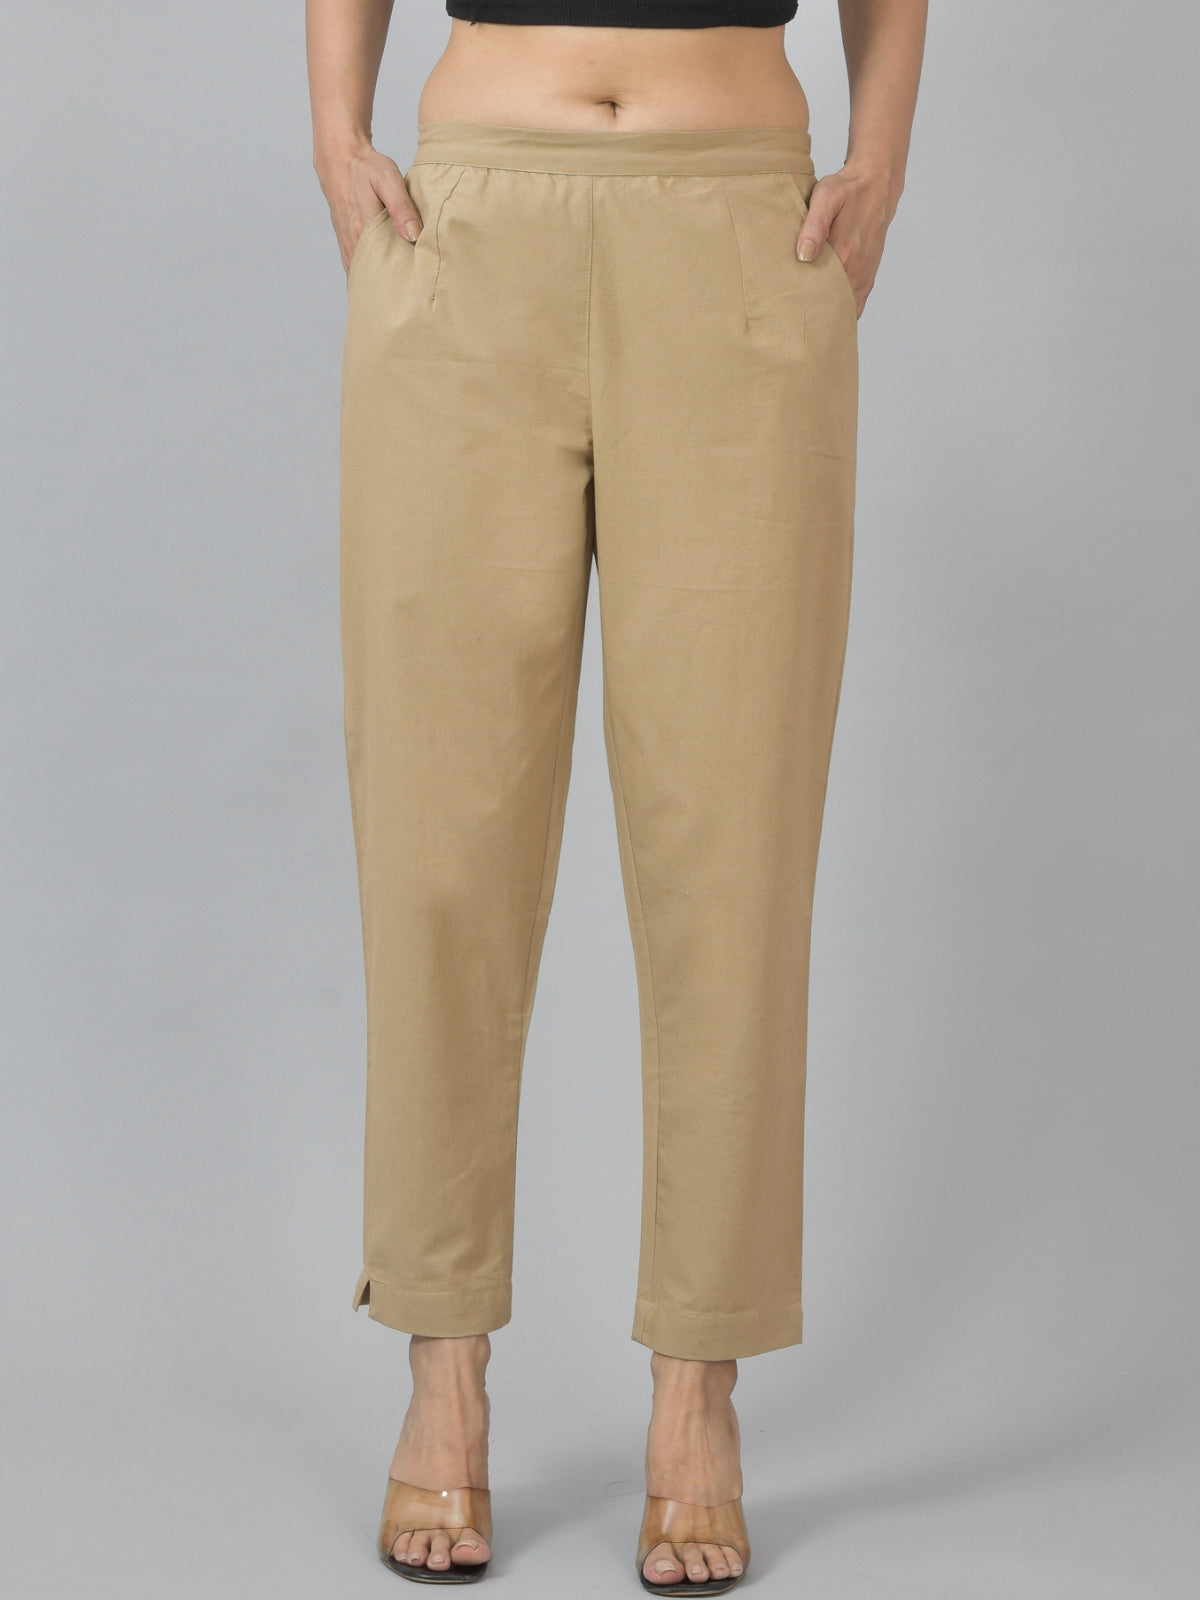 Pack Of 2 Womens Half Elastic Beige And Light Grey Deep Pocket Cotton Pants